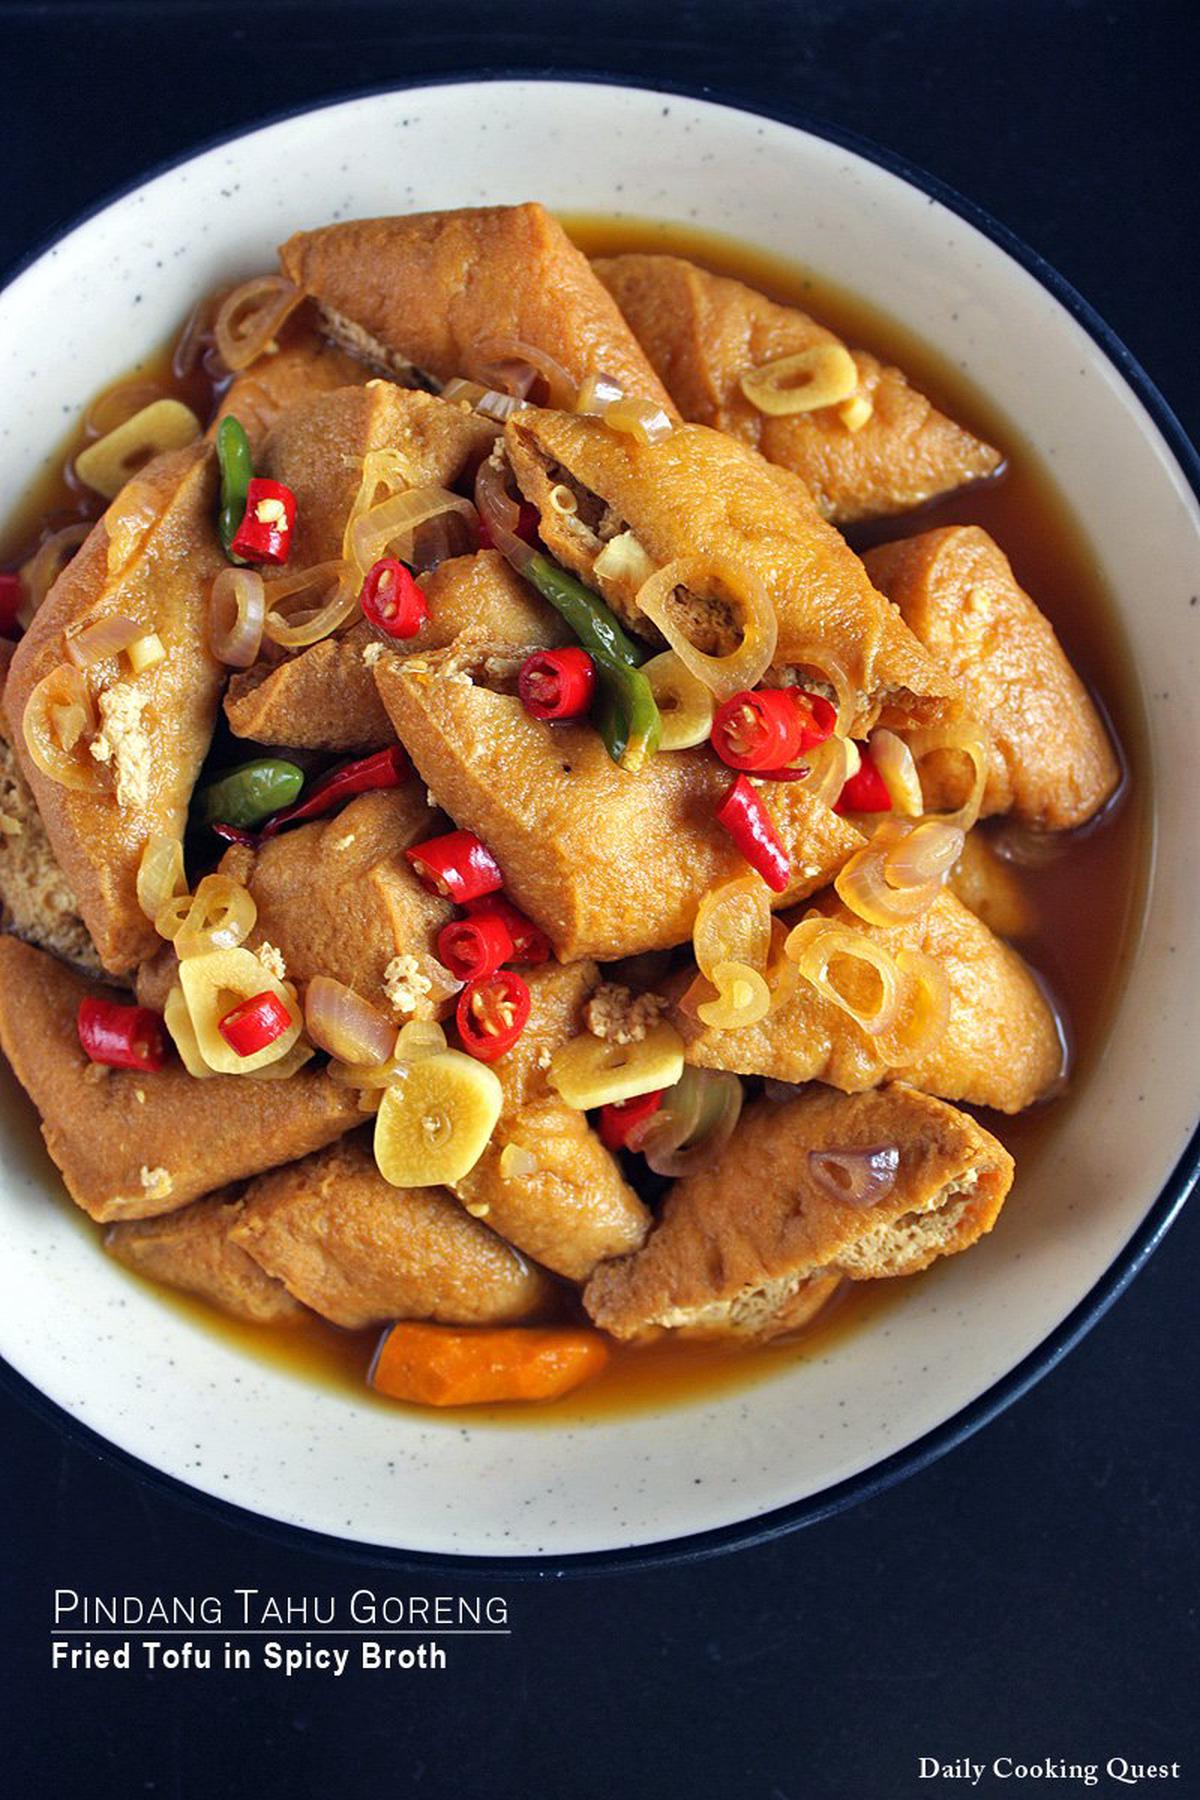 Pindang Tahu Goreng - Fried Tofu in Spicy Broth